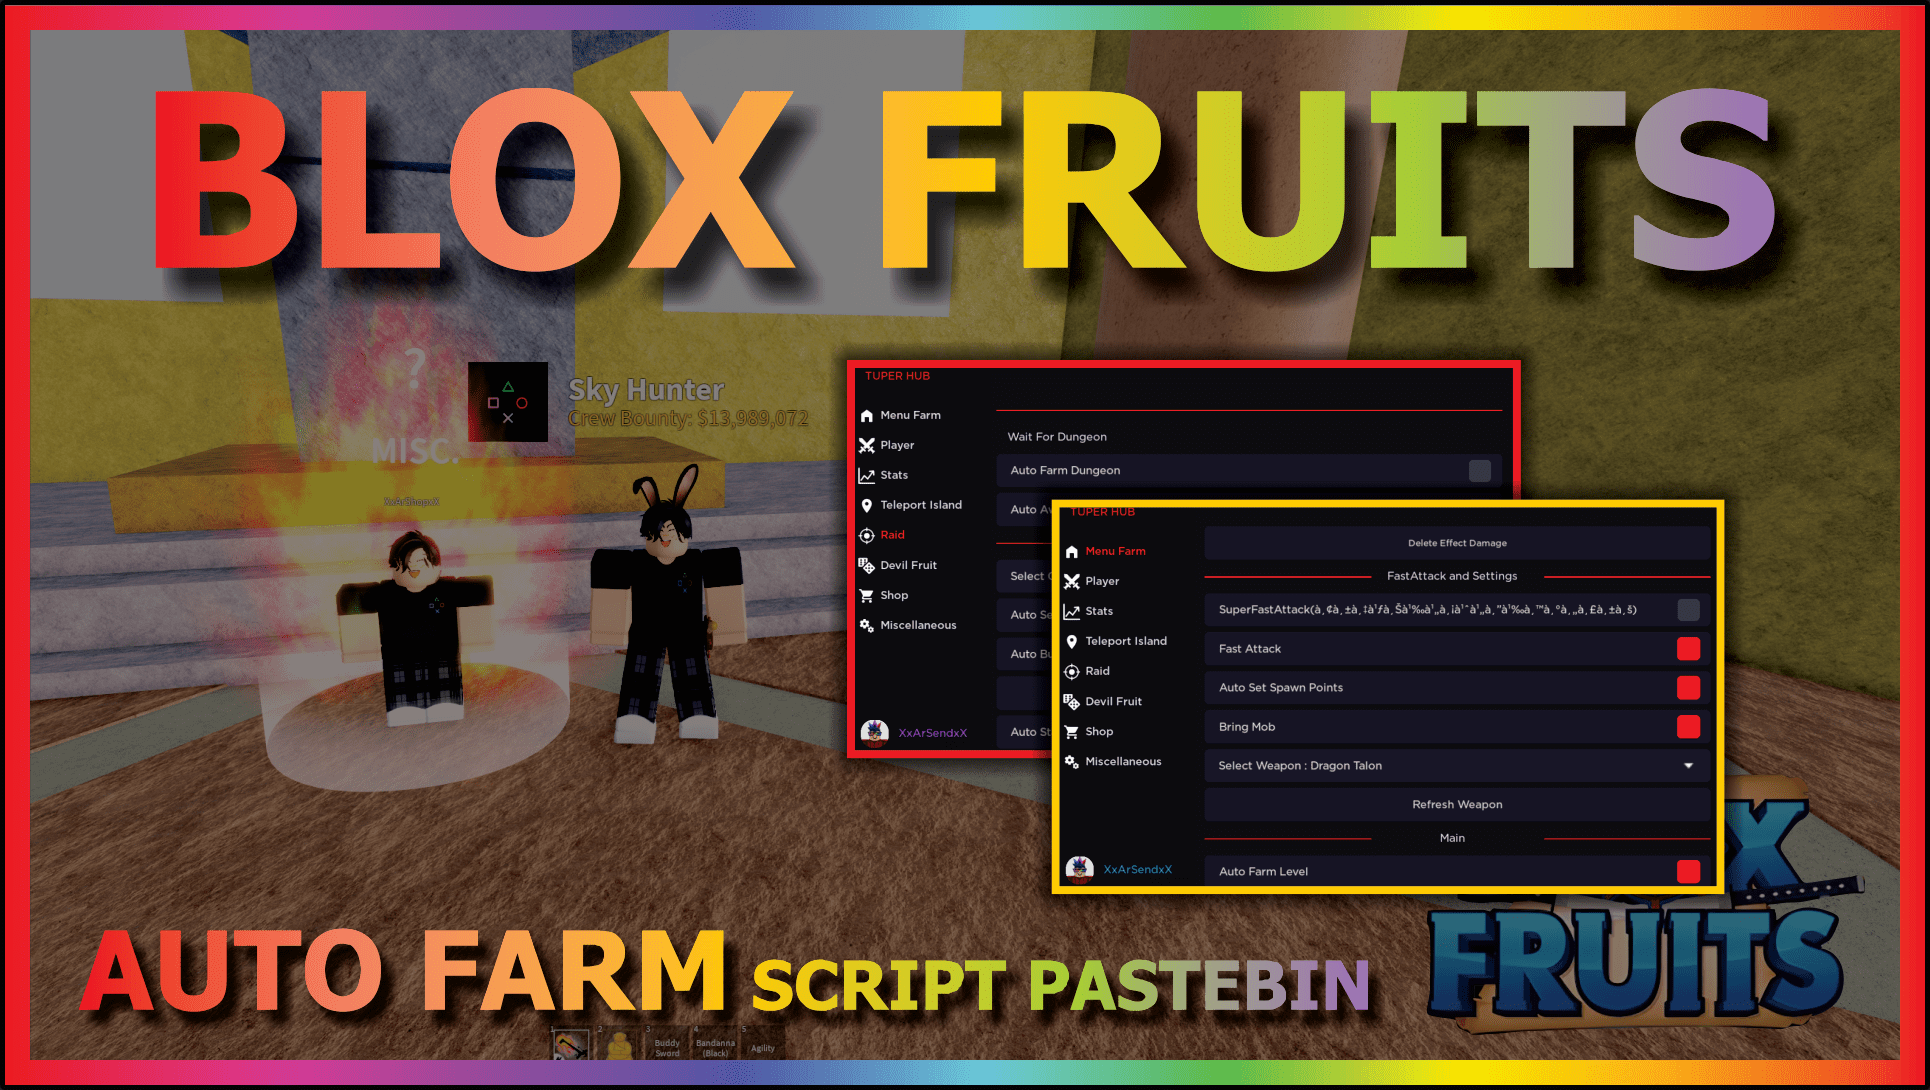 Blox Fruits [Kill Aura/Auto Farm/Auto Raid] Scripts